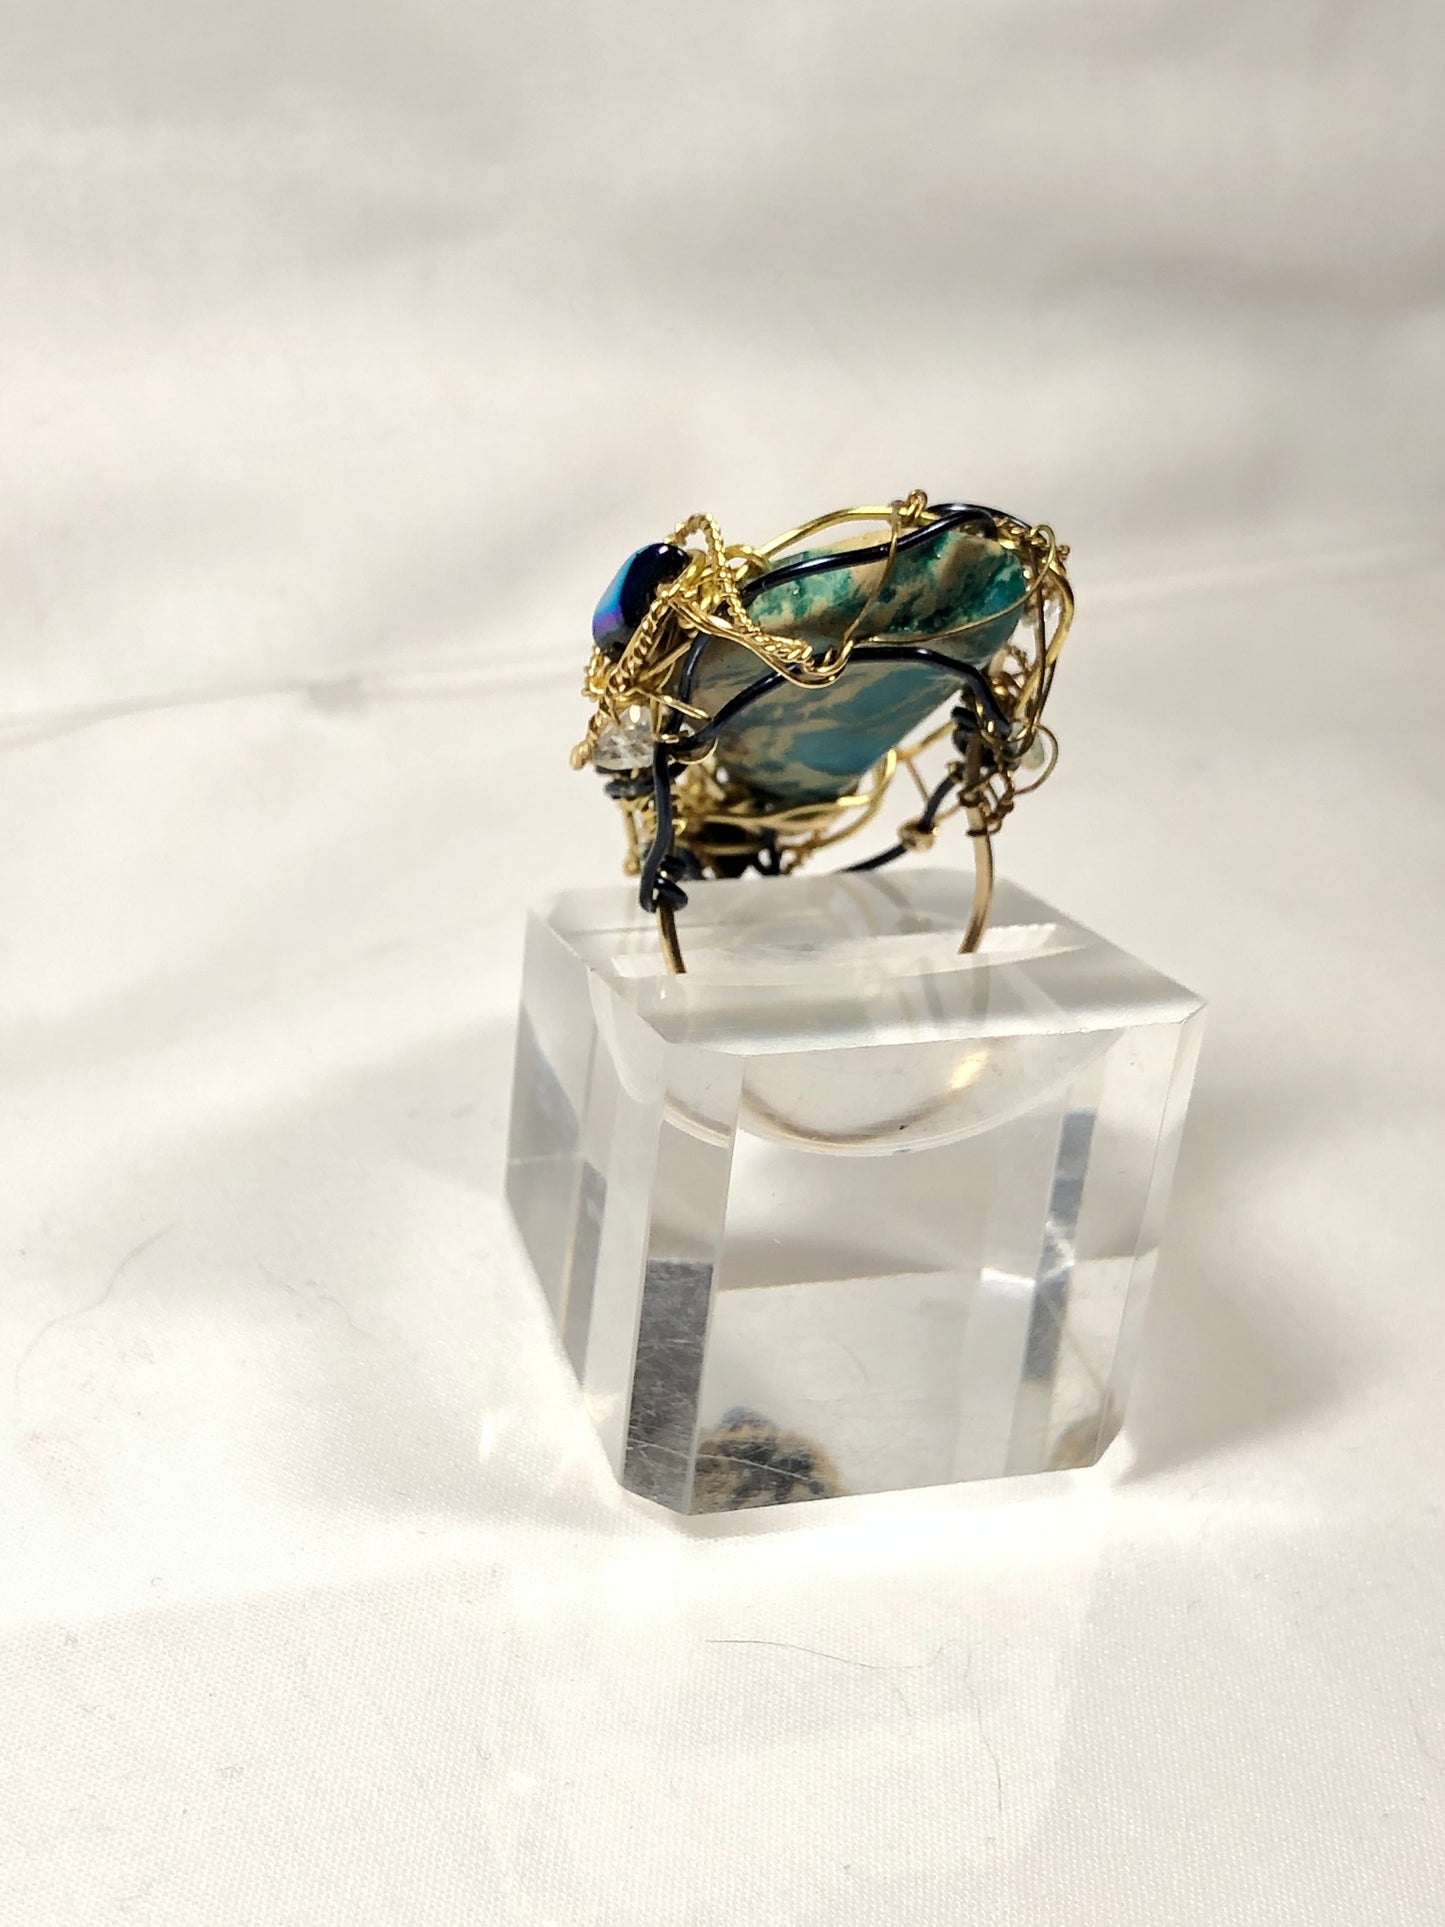 Australian turquoise ring